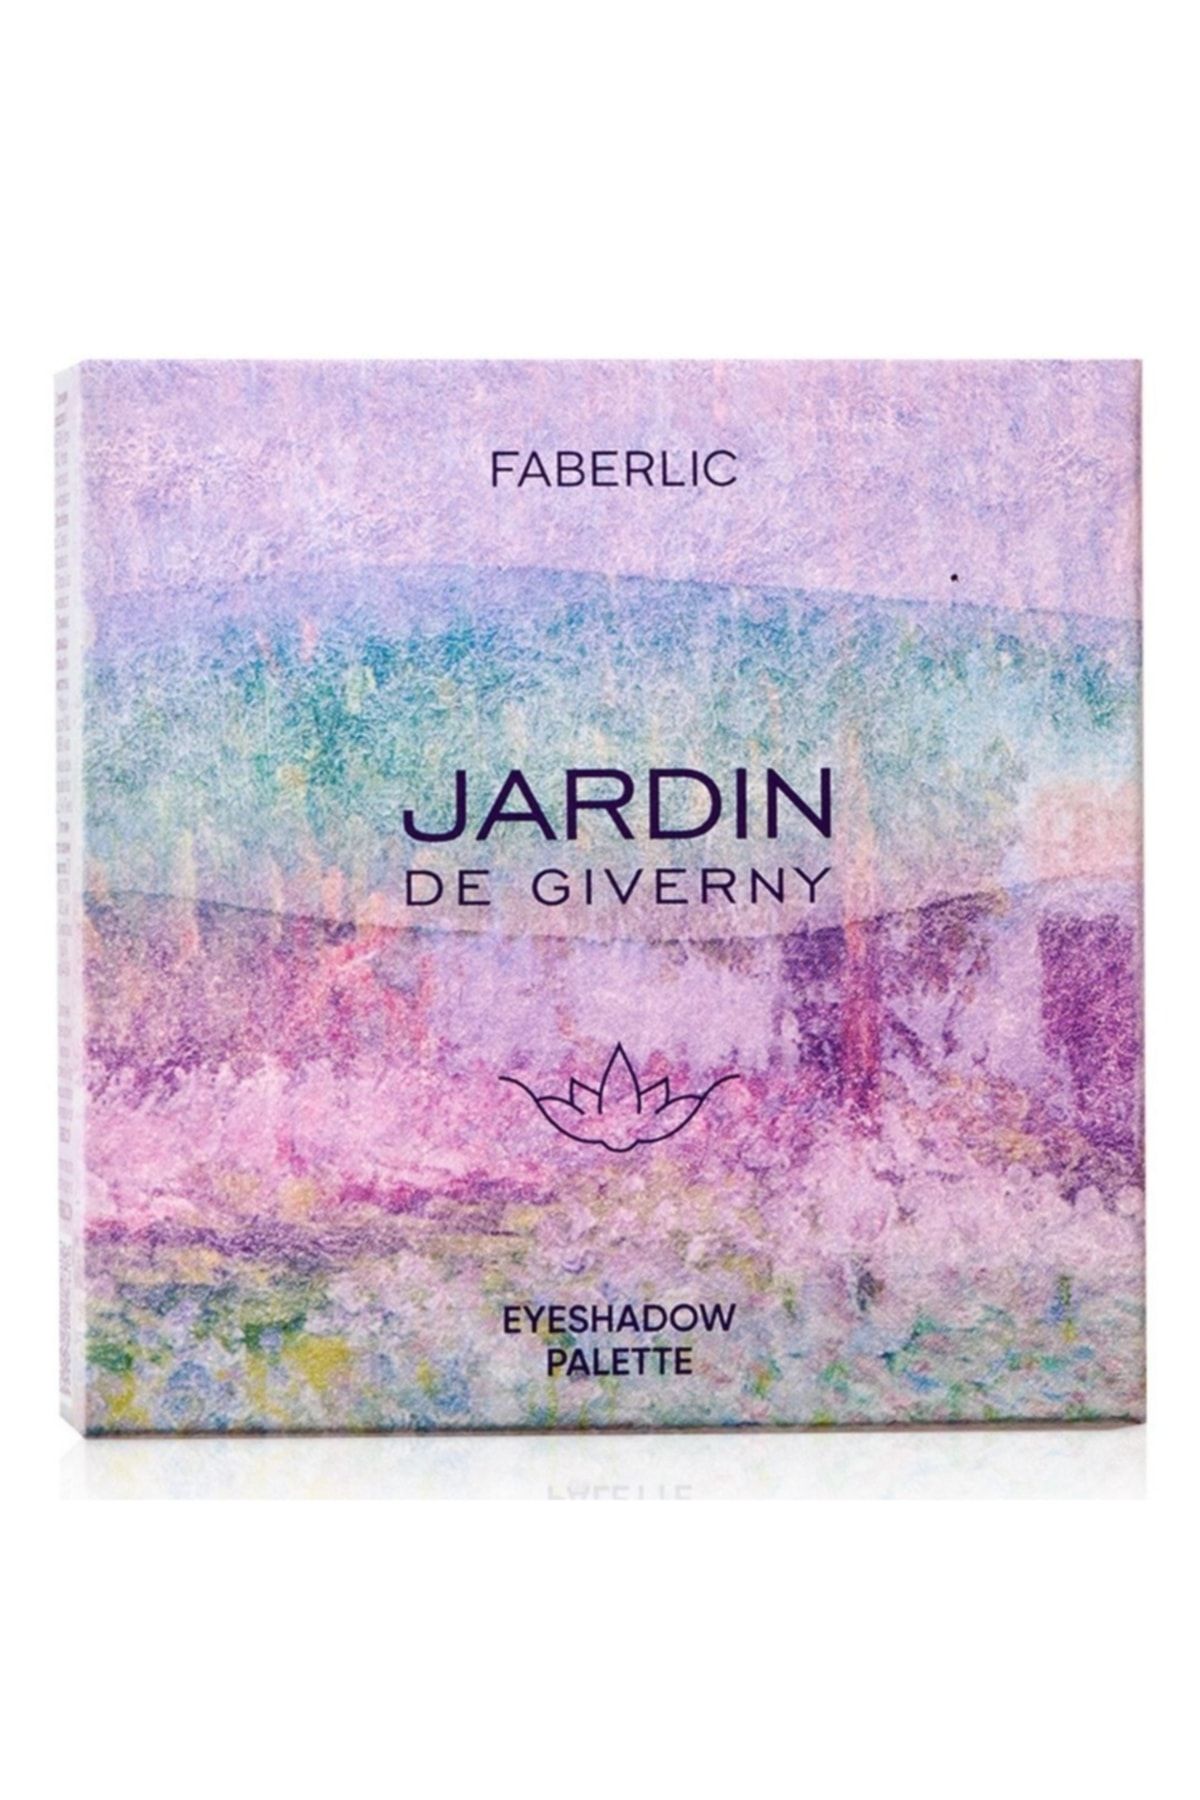 Faberlic پالت سرآینه باغ ژاردن دو گیورنی